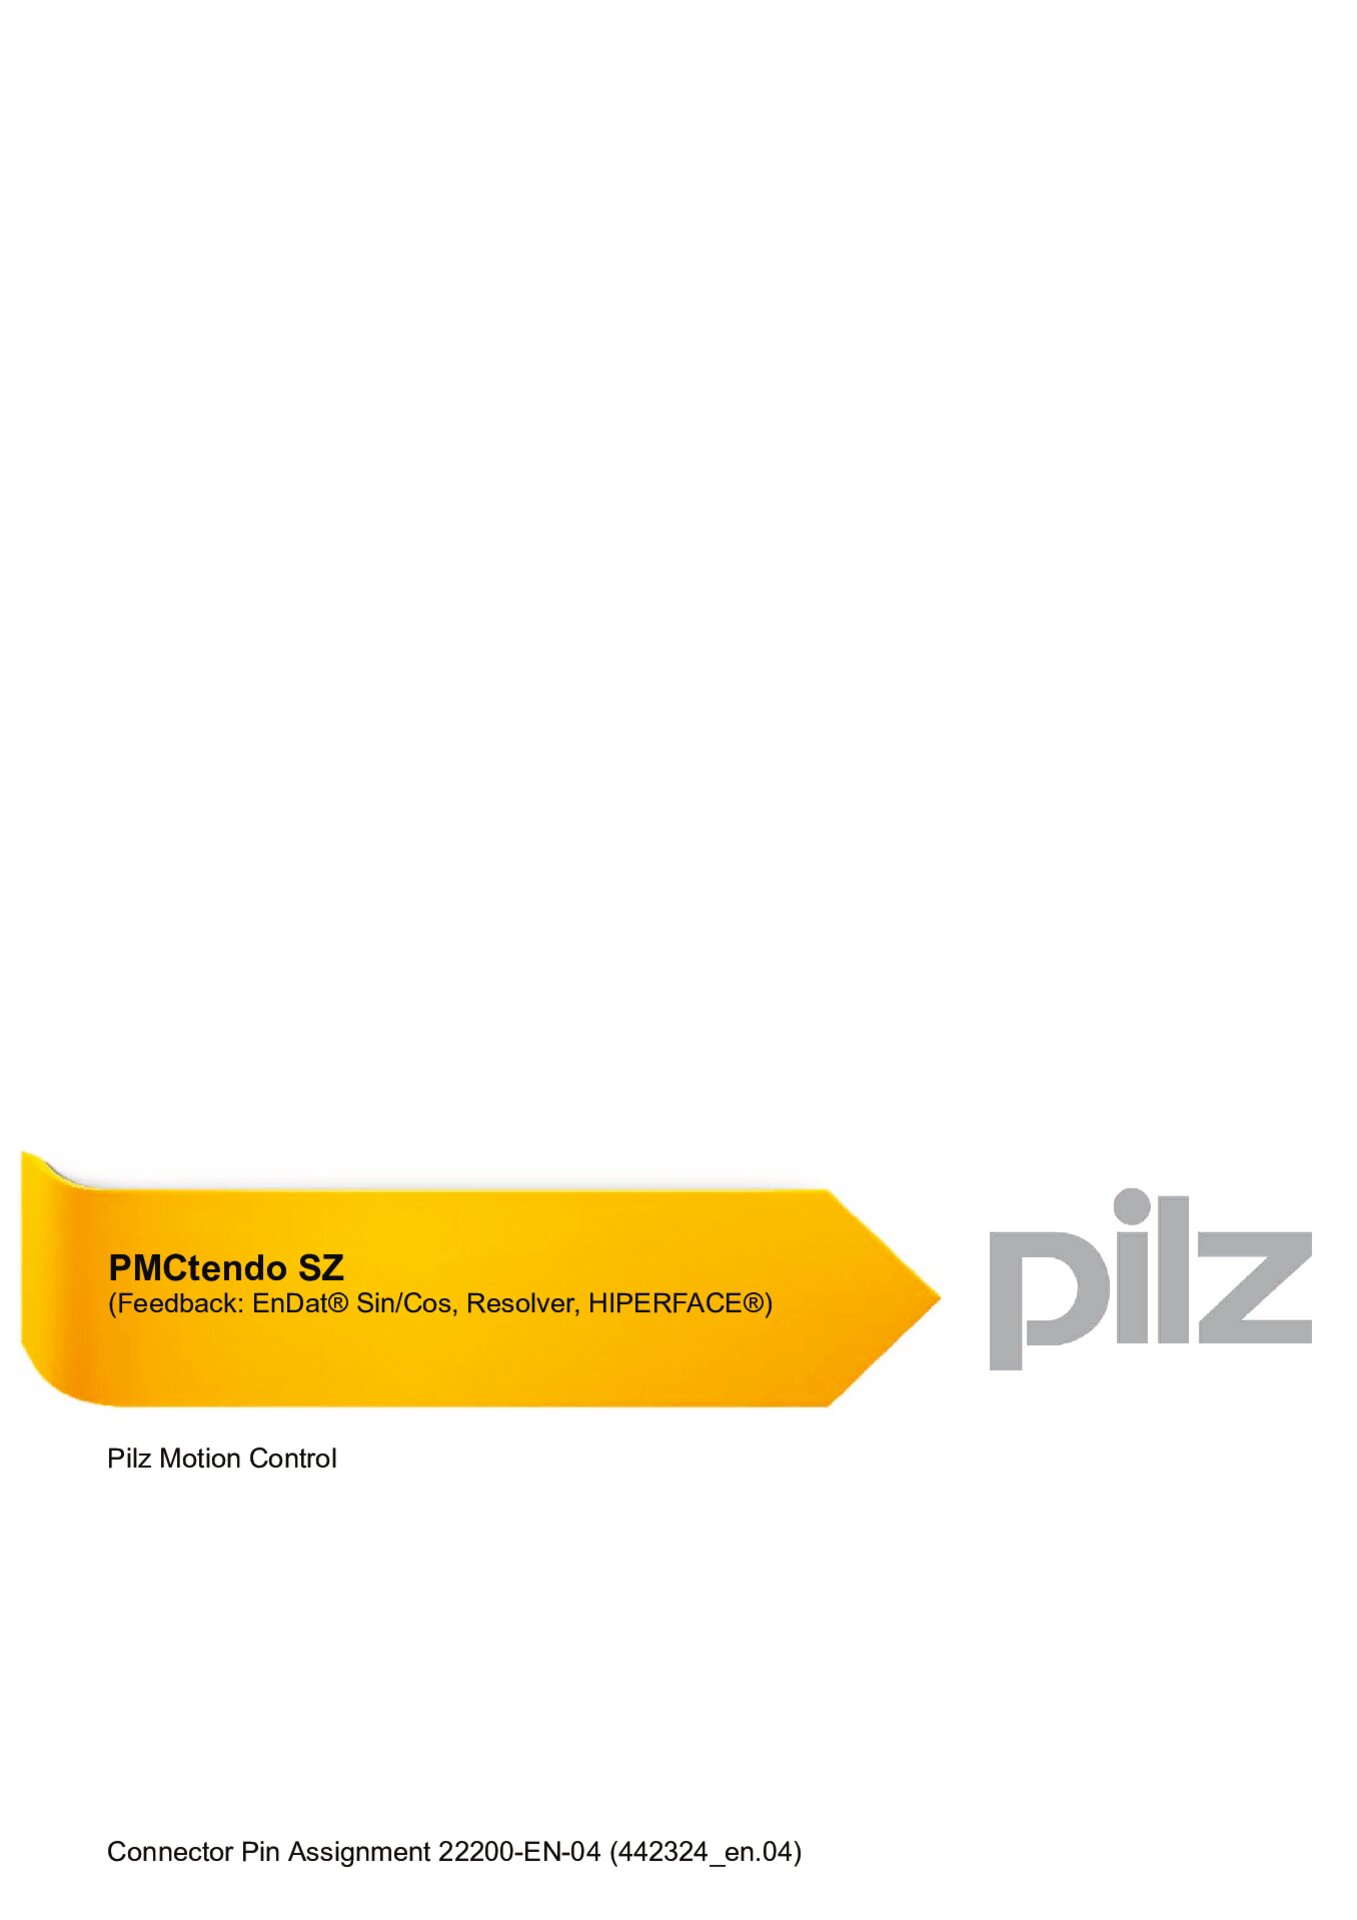 Anschlussplan PMCtendo SZ Feedback analog (Pilz ID 22200-EN-02)